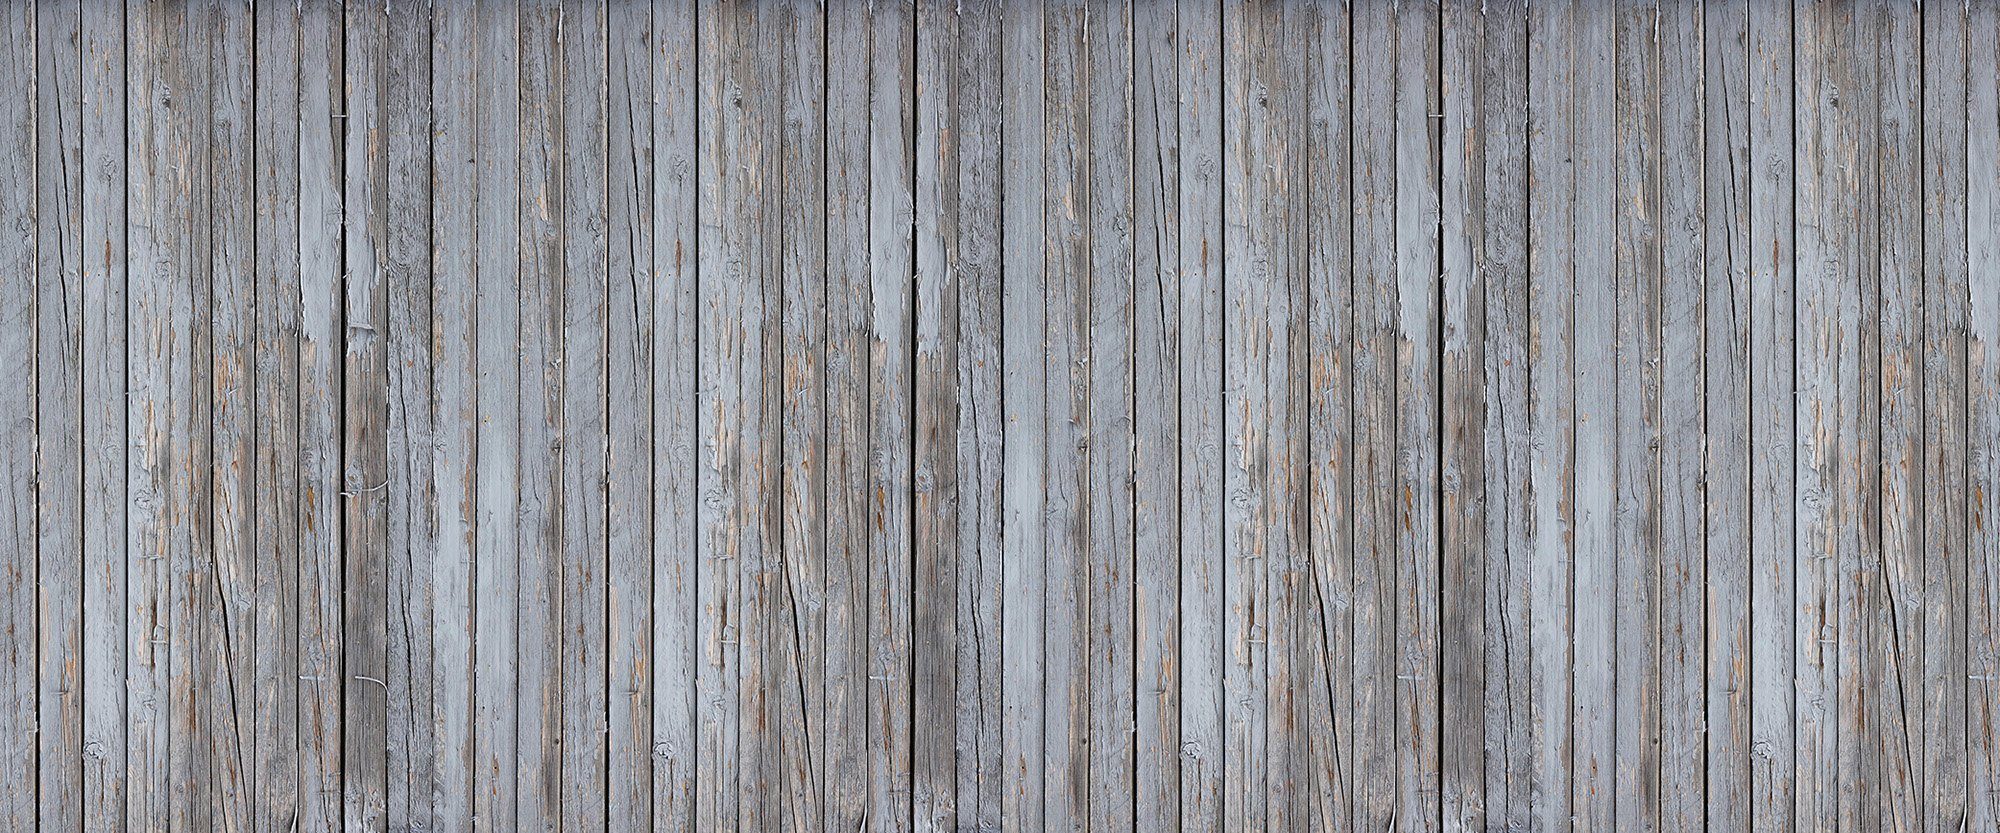 Fototapete Paper Wooden Wall, (Set, 6 Schräge Vlies, St), Architects Old Wand,